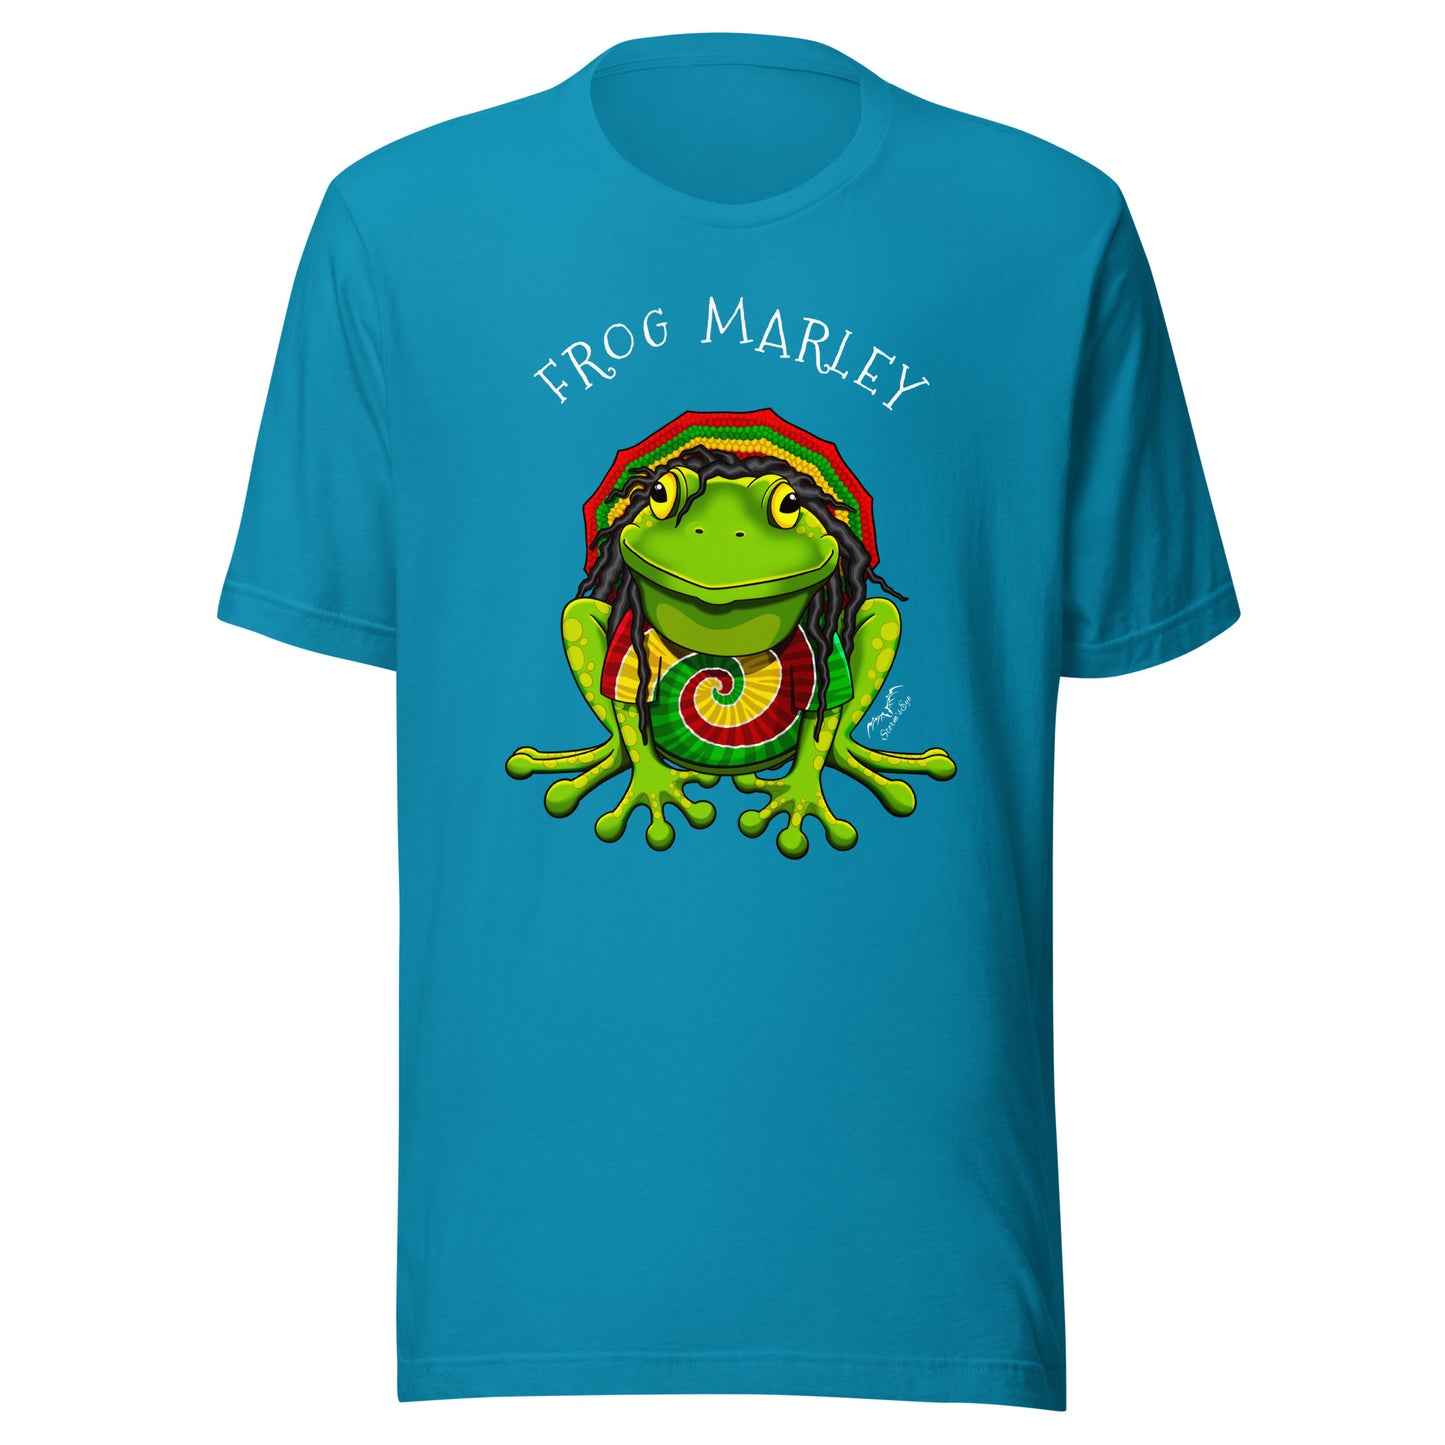 stormseye design frog marley reggae T shirt, flat view bright blue